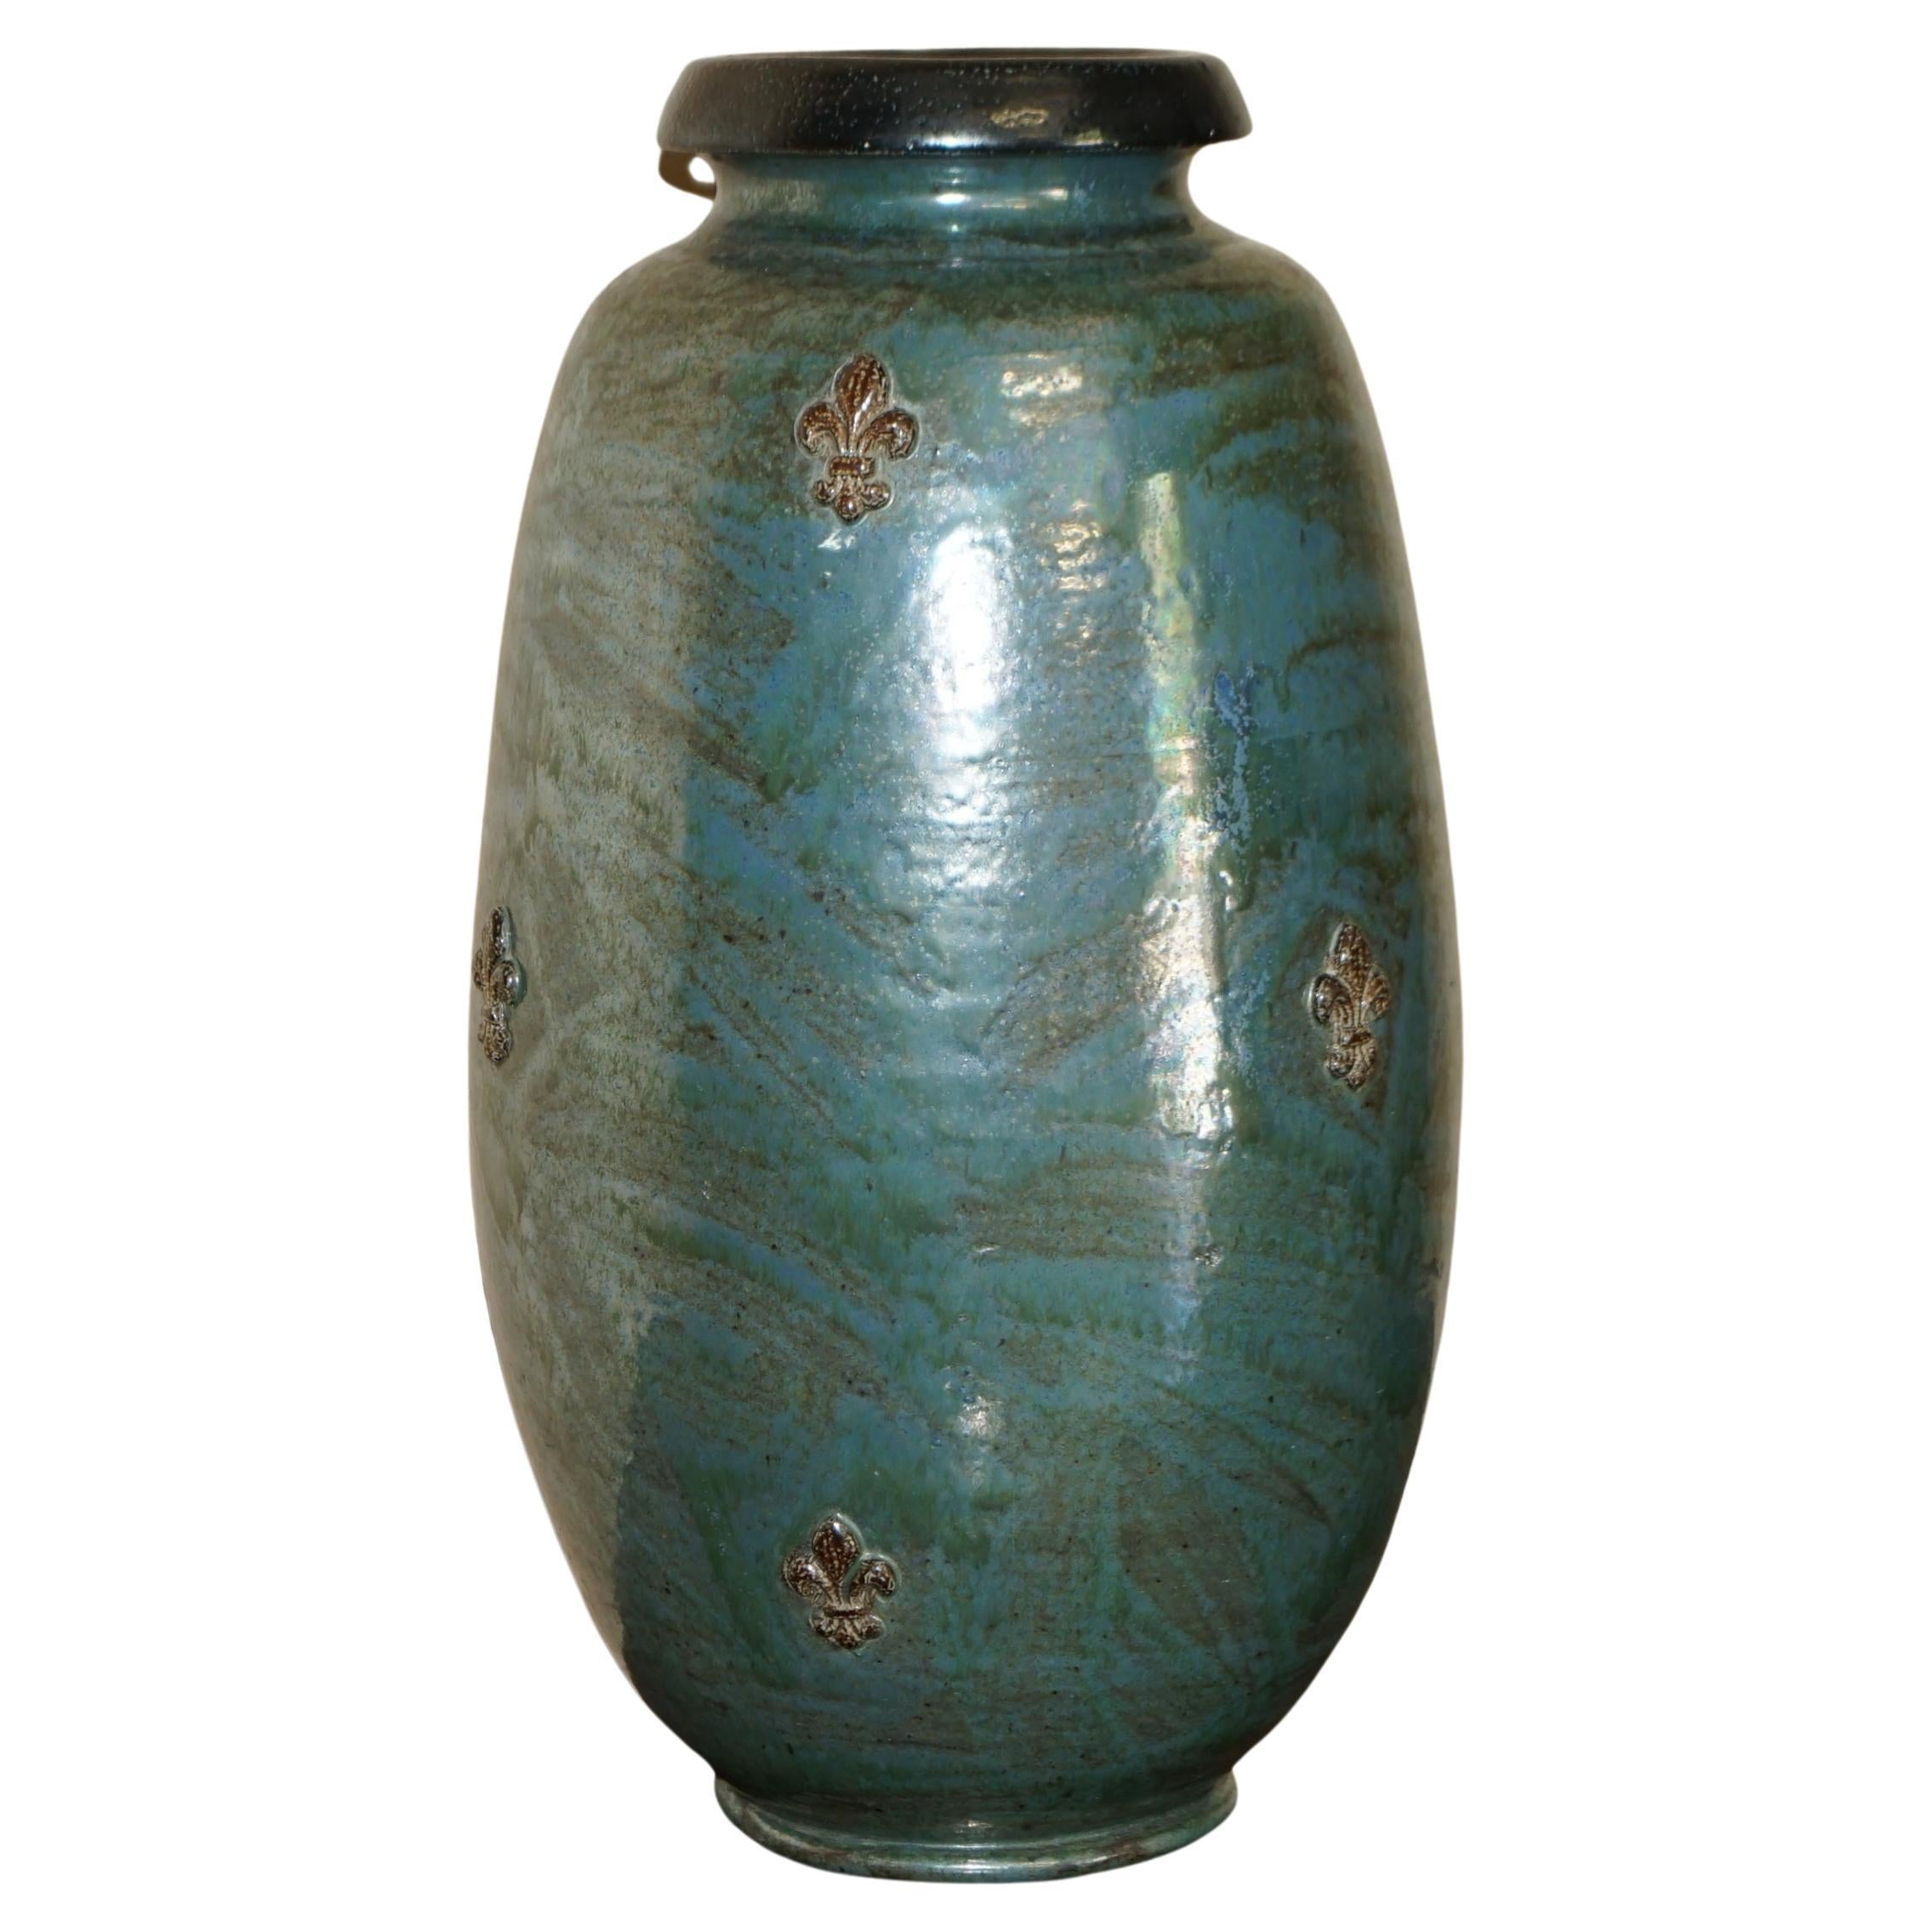 1 of 3 Signed Roger Guerin 1930 Fleur De Lis Ceramic Stoneware Pottery Vase Pots For Sale